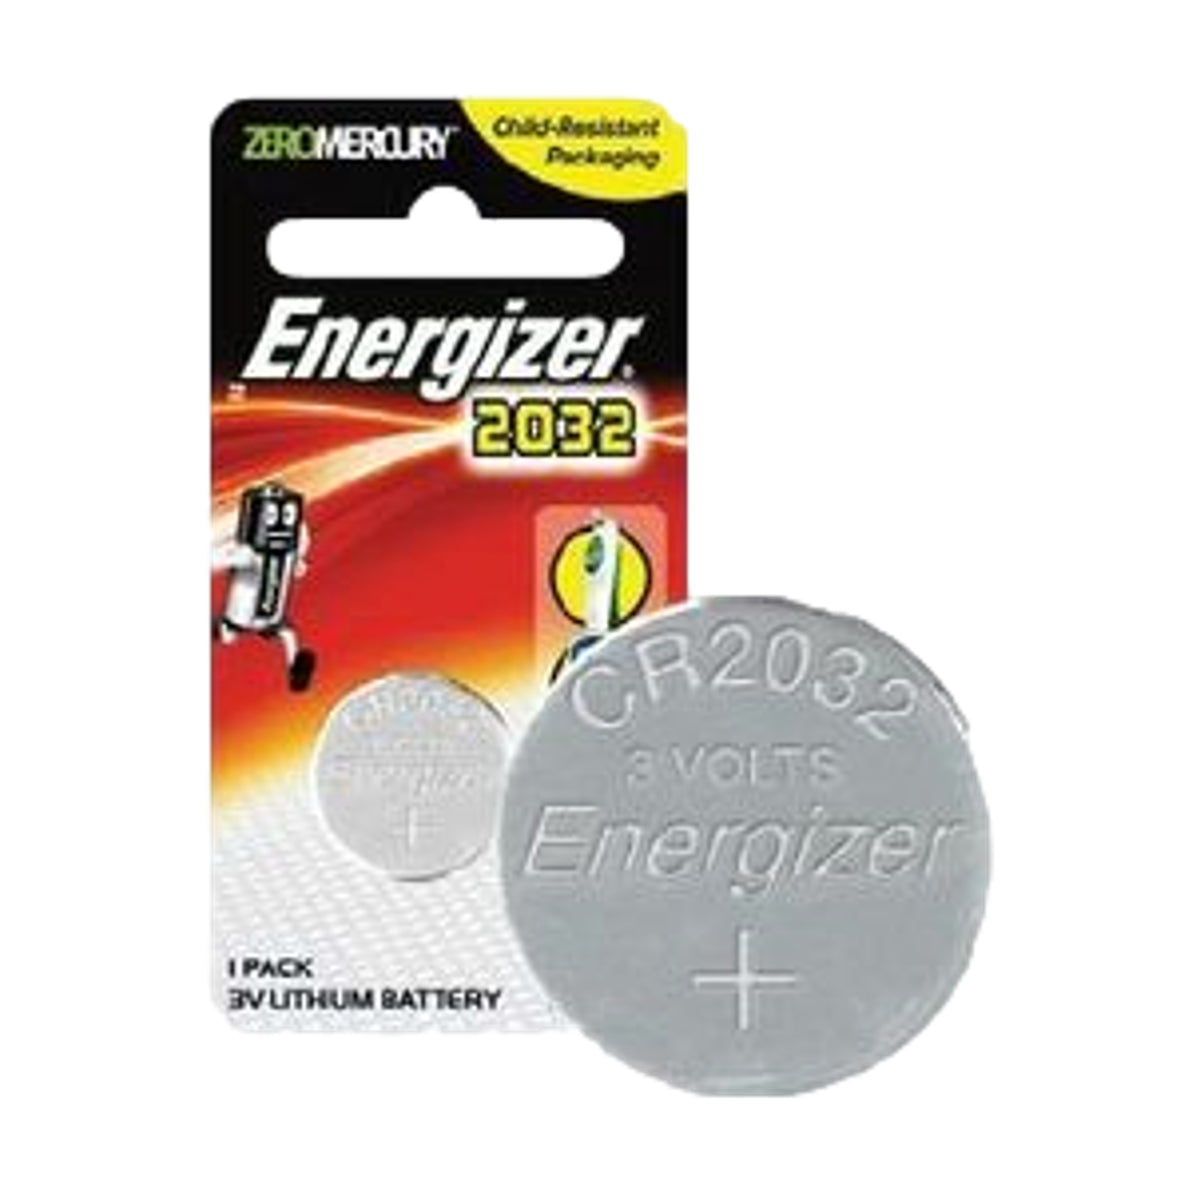 Eveready CR2032 Energizer 3 Volt Lithium Battery